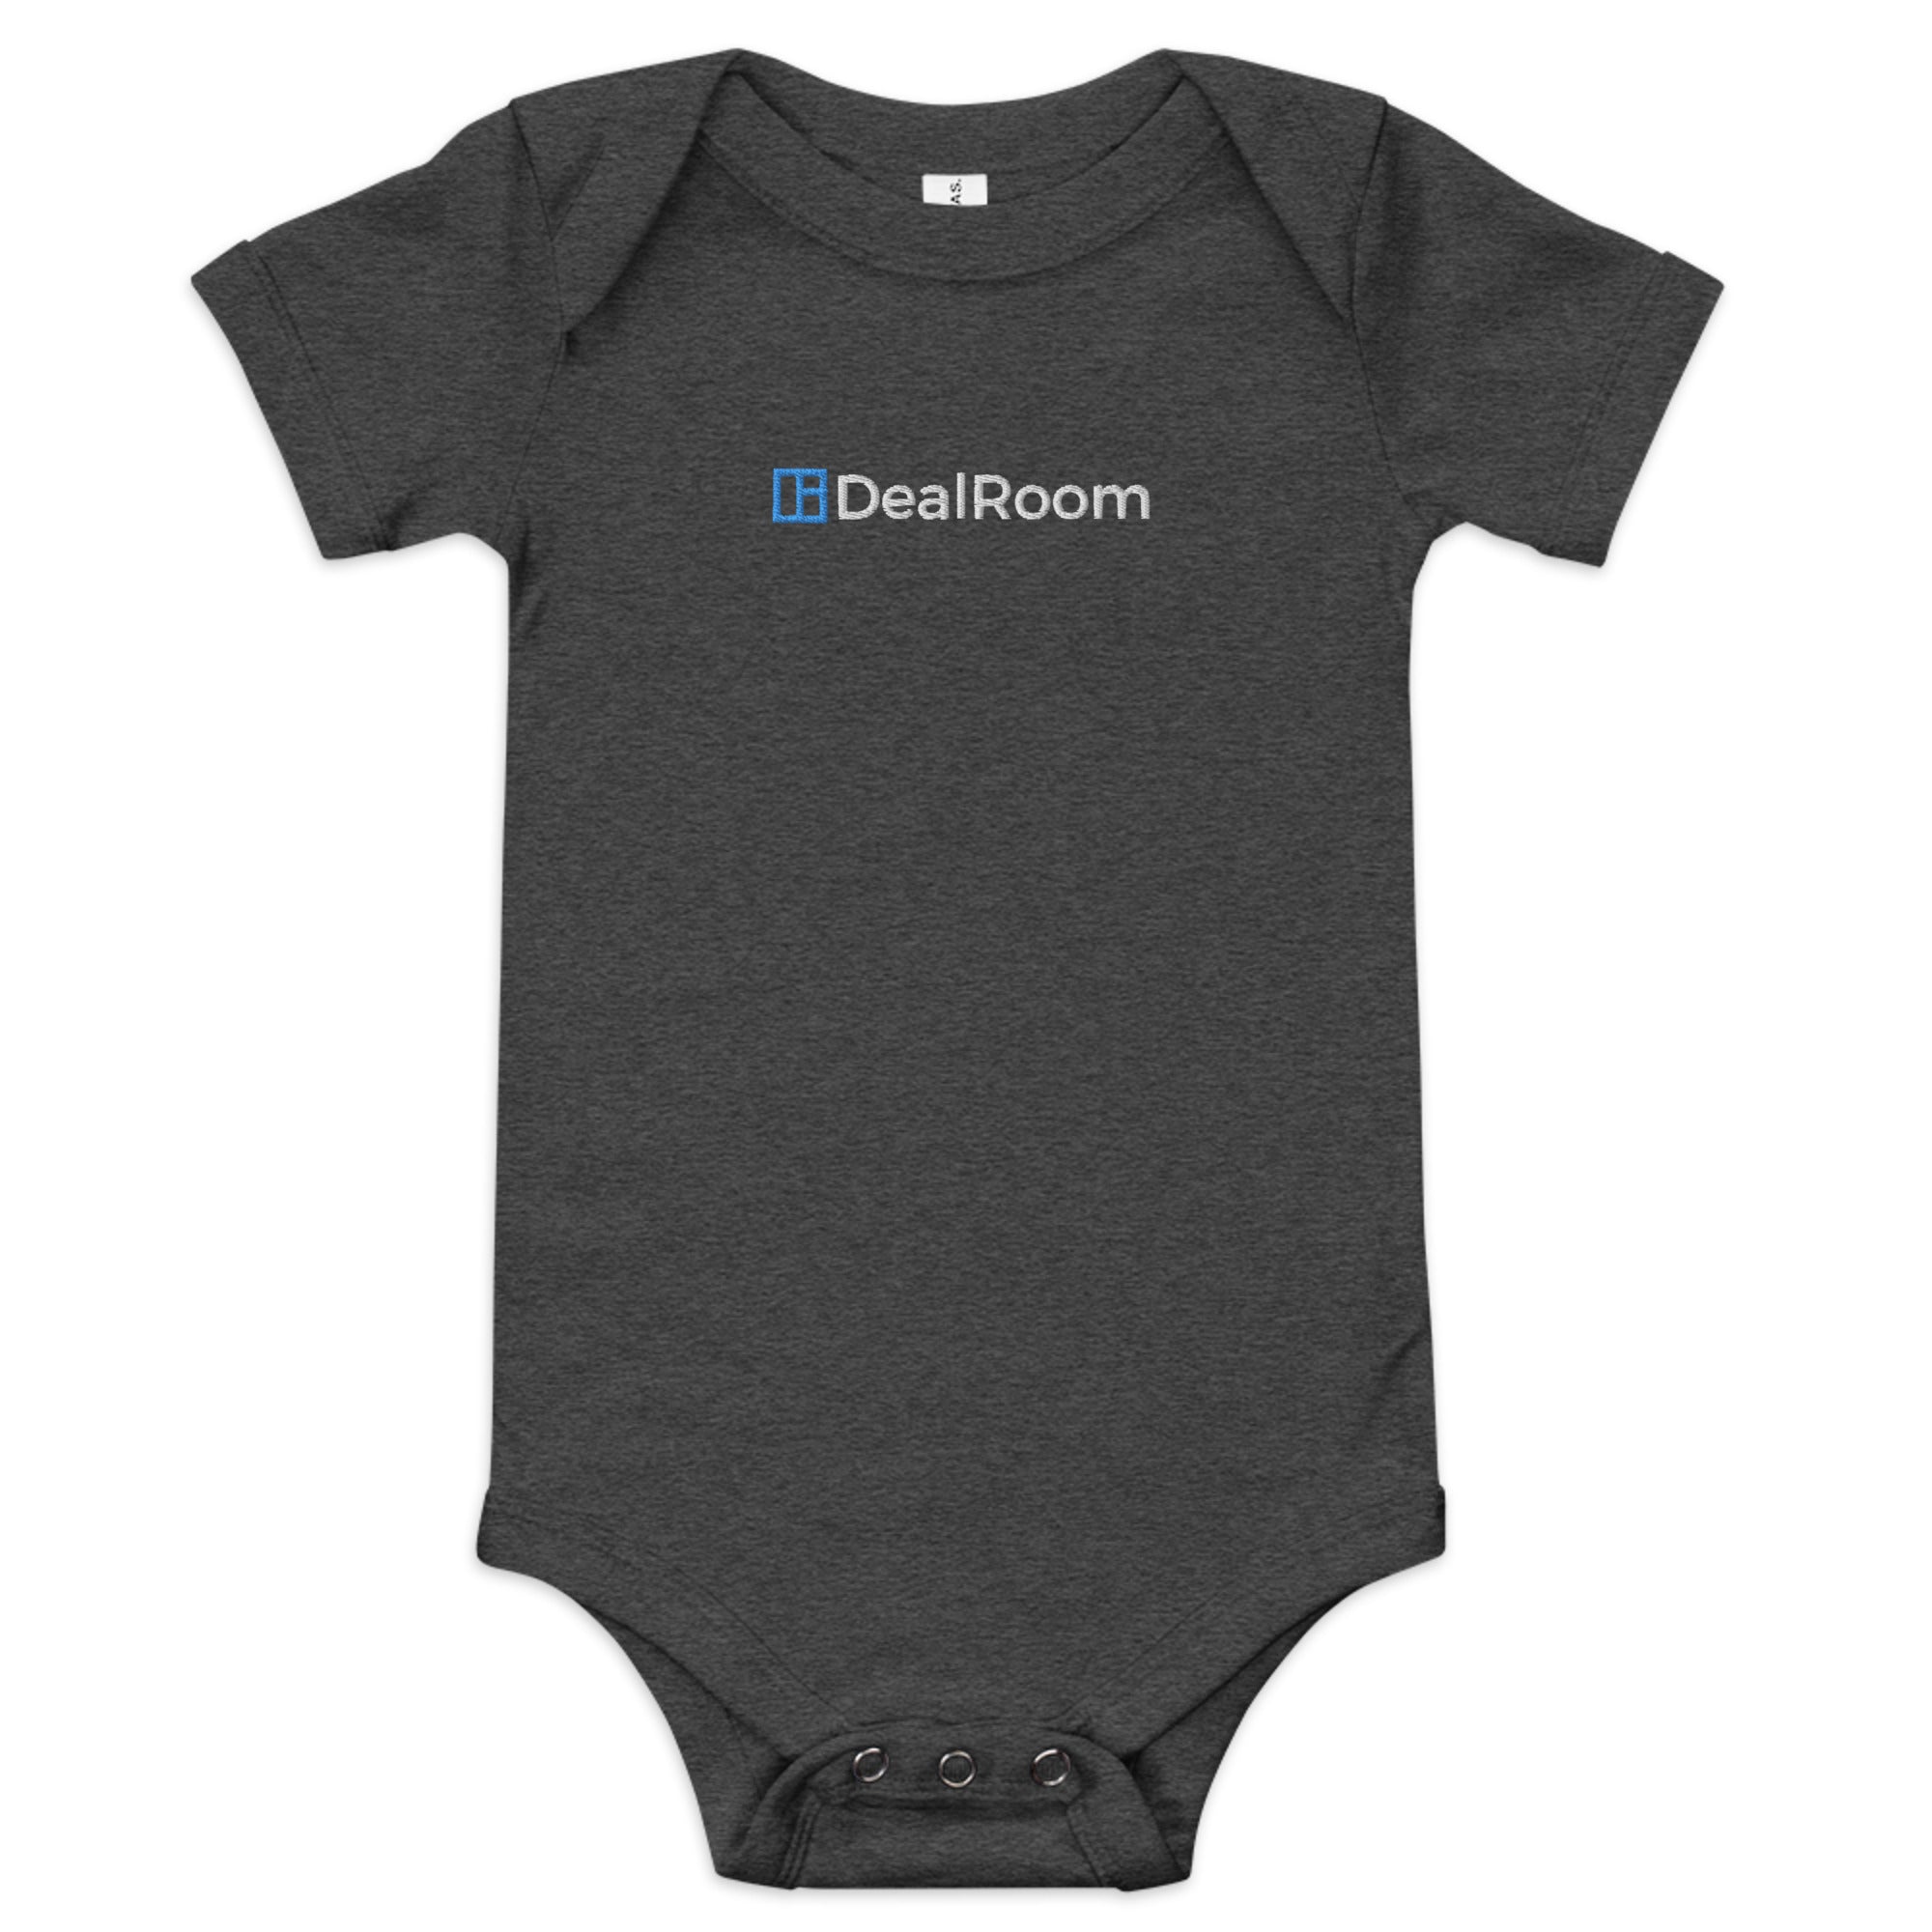 DealRoom Baby short sleeve one piece